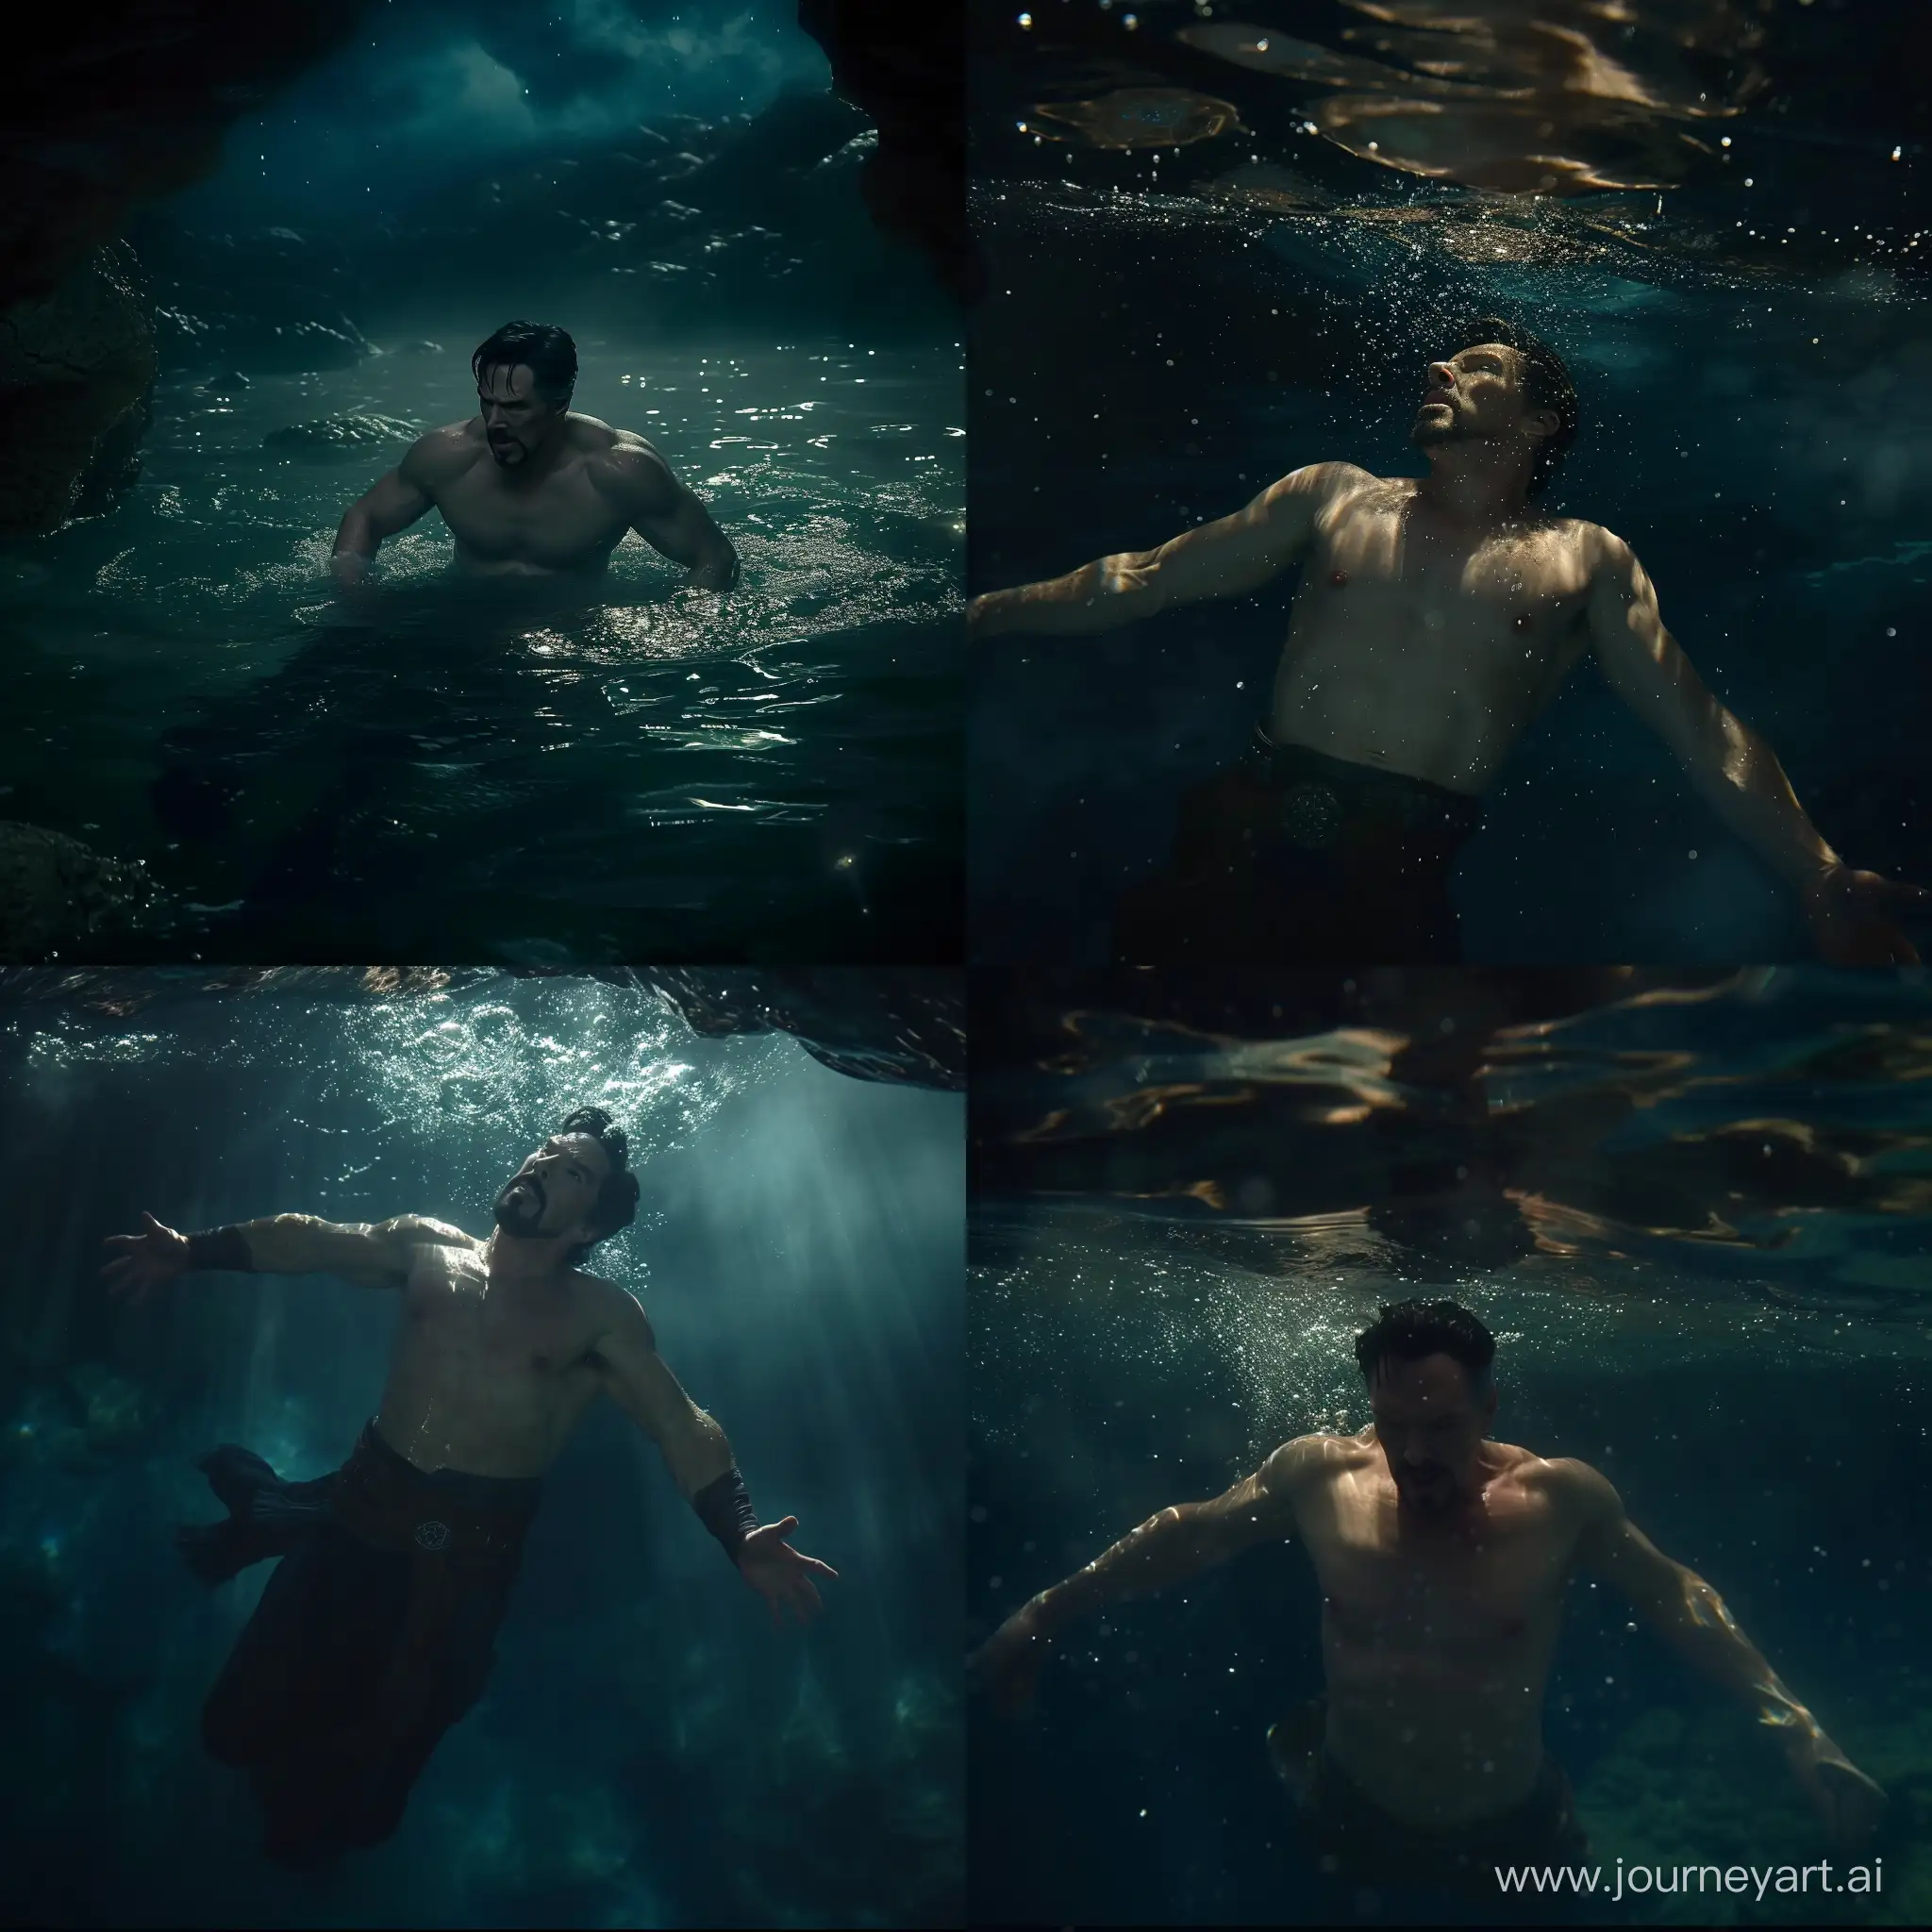 Shirtless-Doctor-Strange-Night-Swim-in-the-Sea